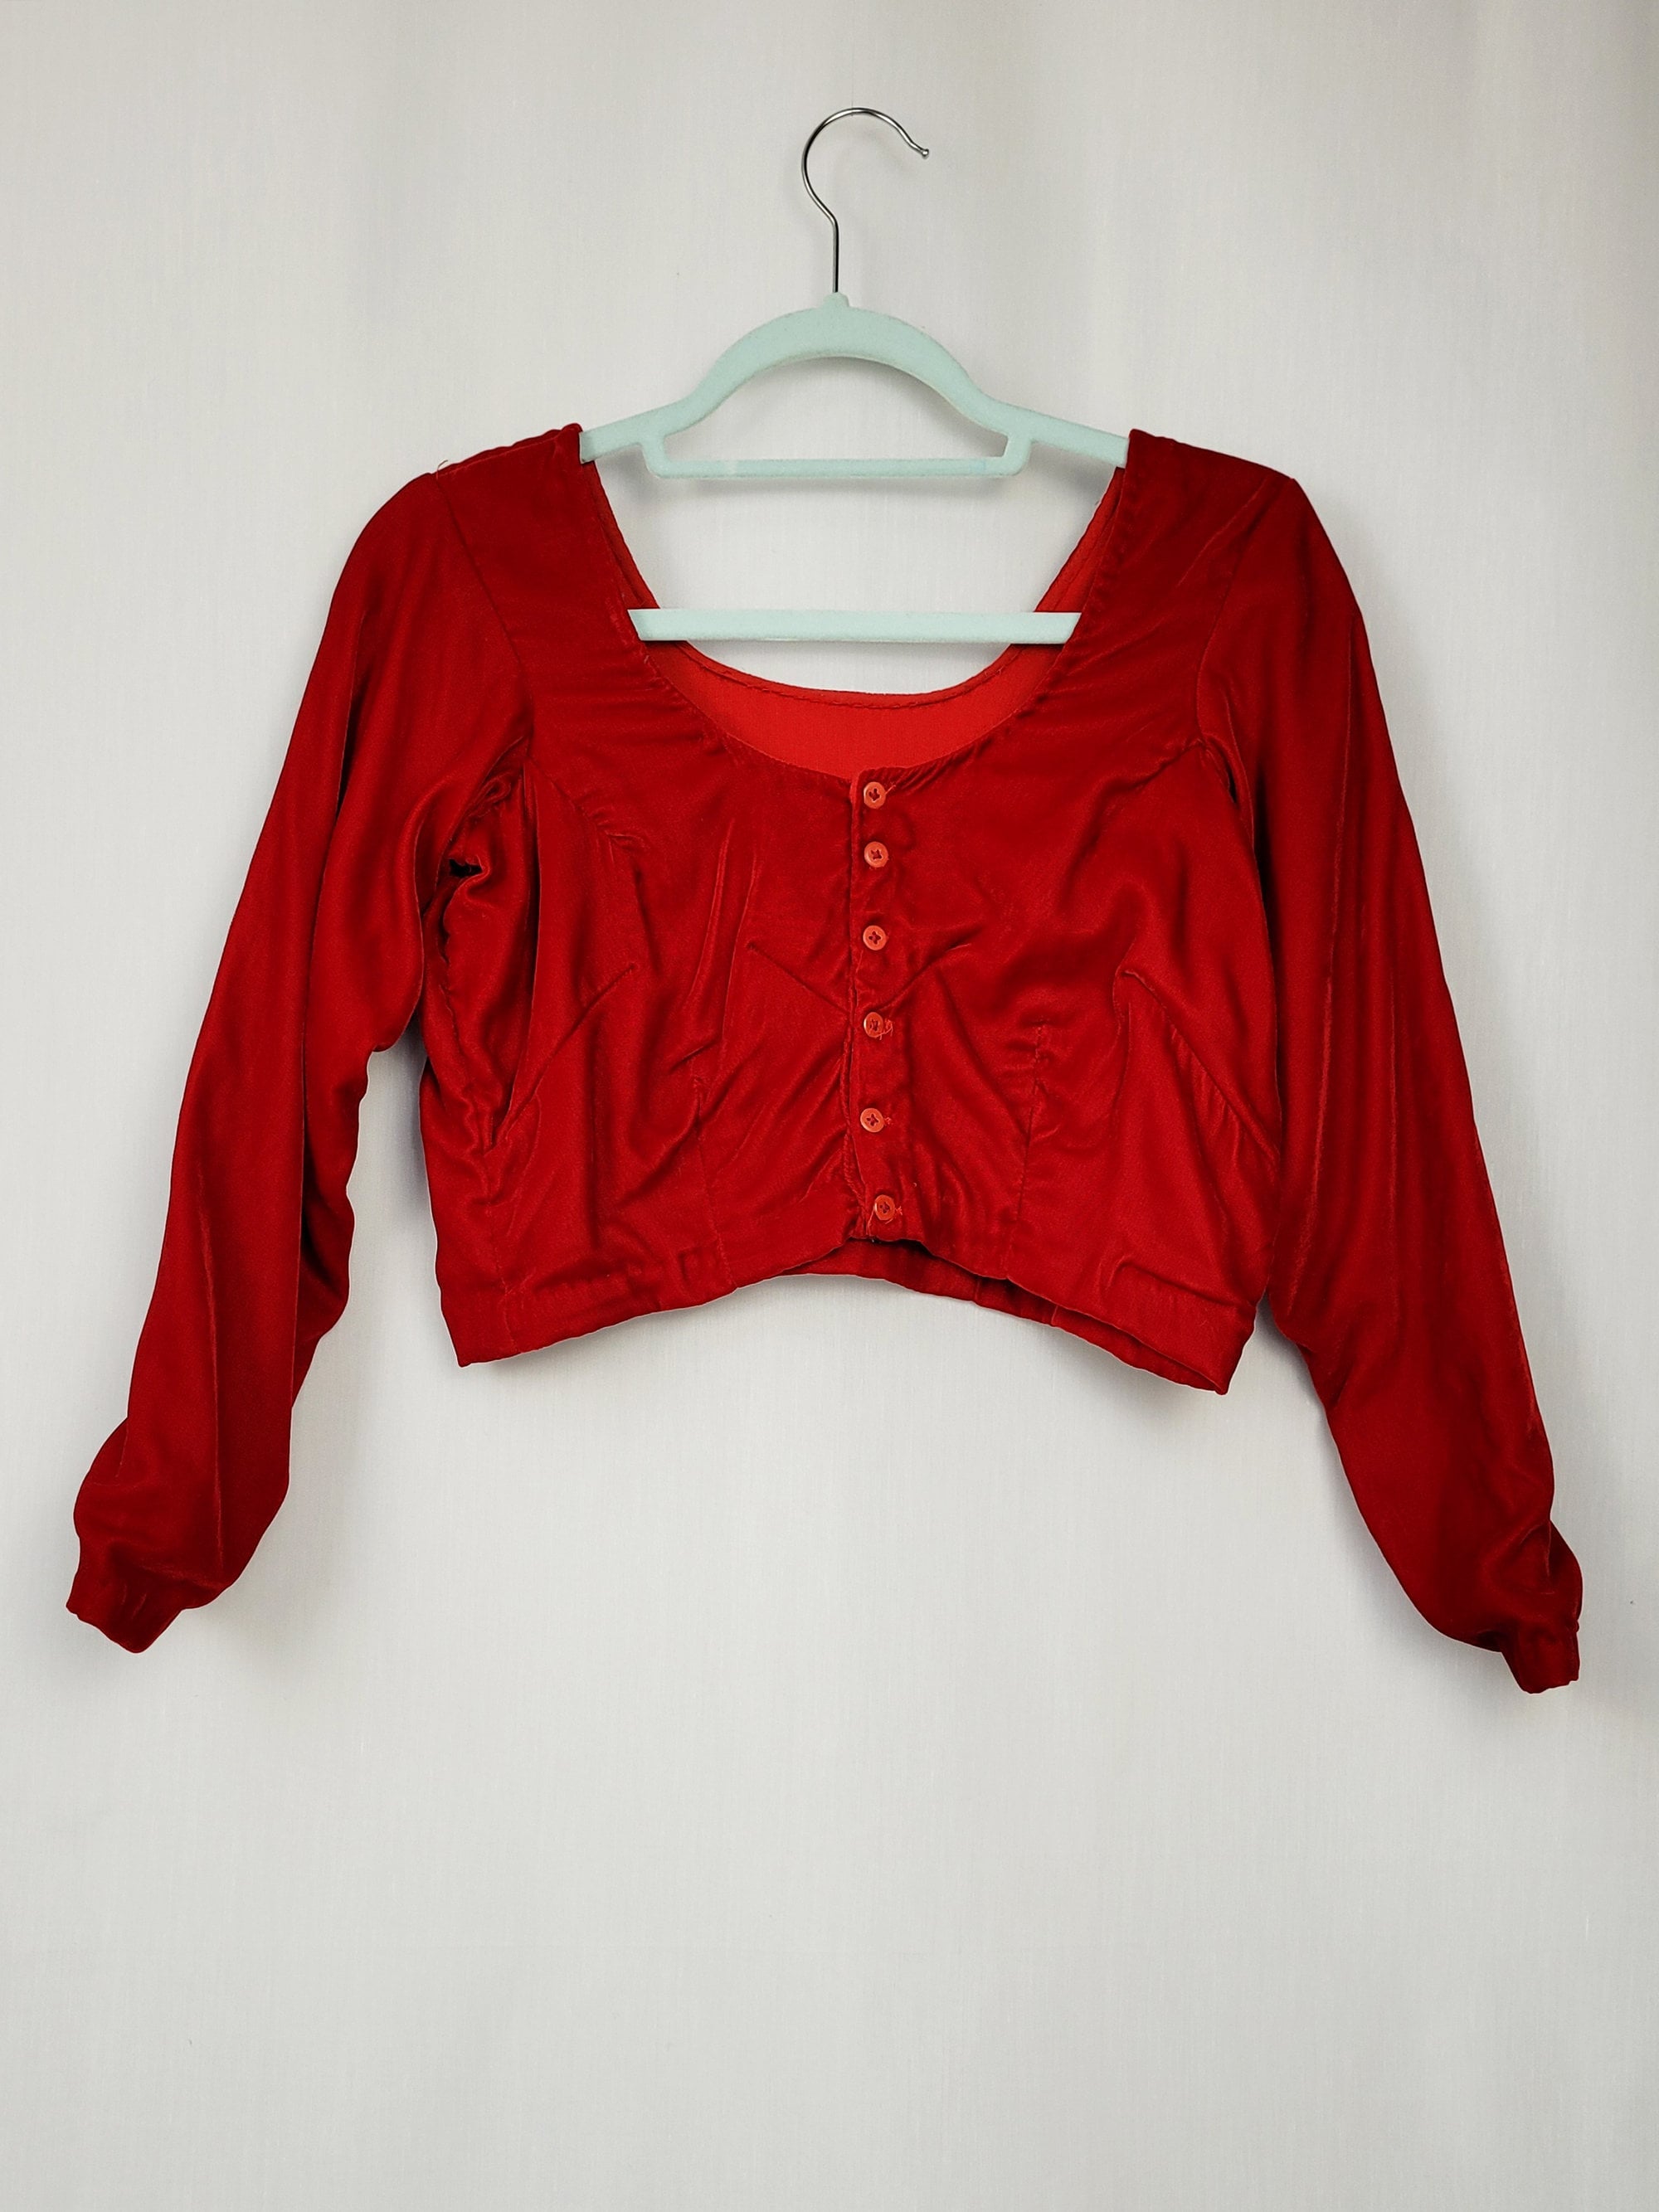 Vintage 80s handmade red velveteen cropped top